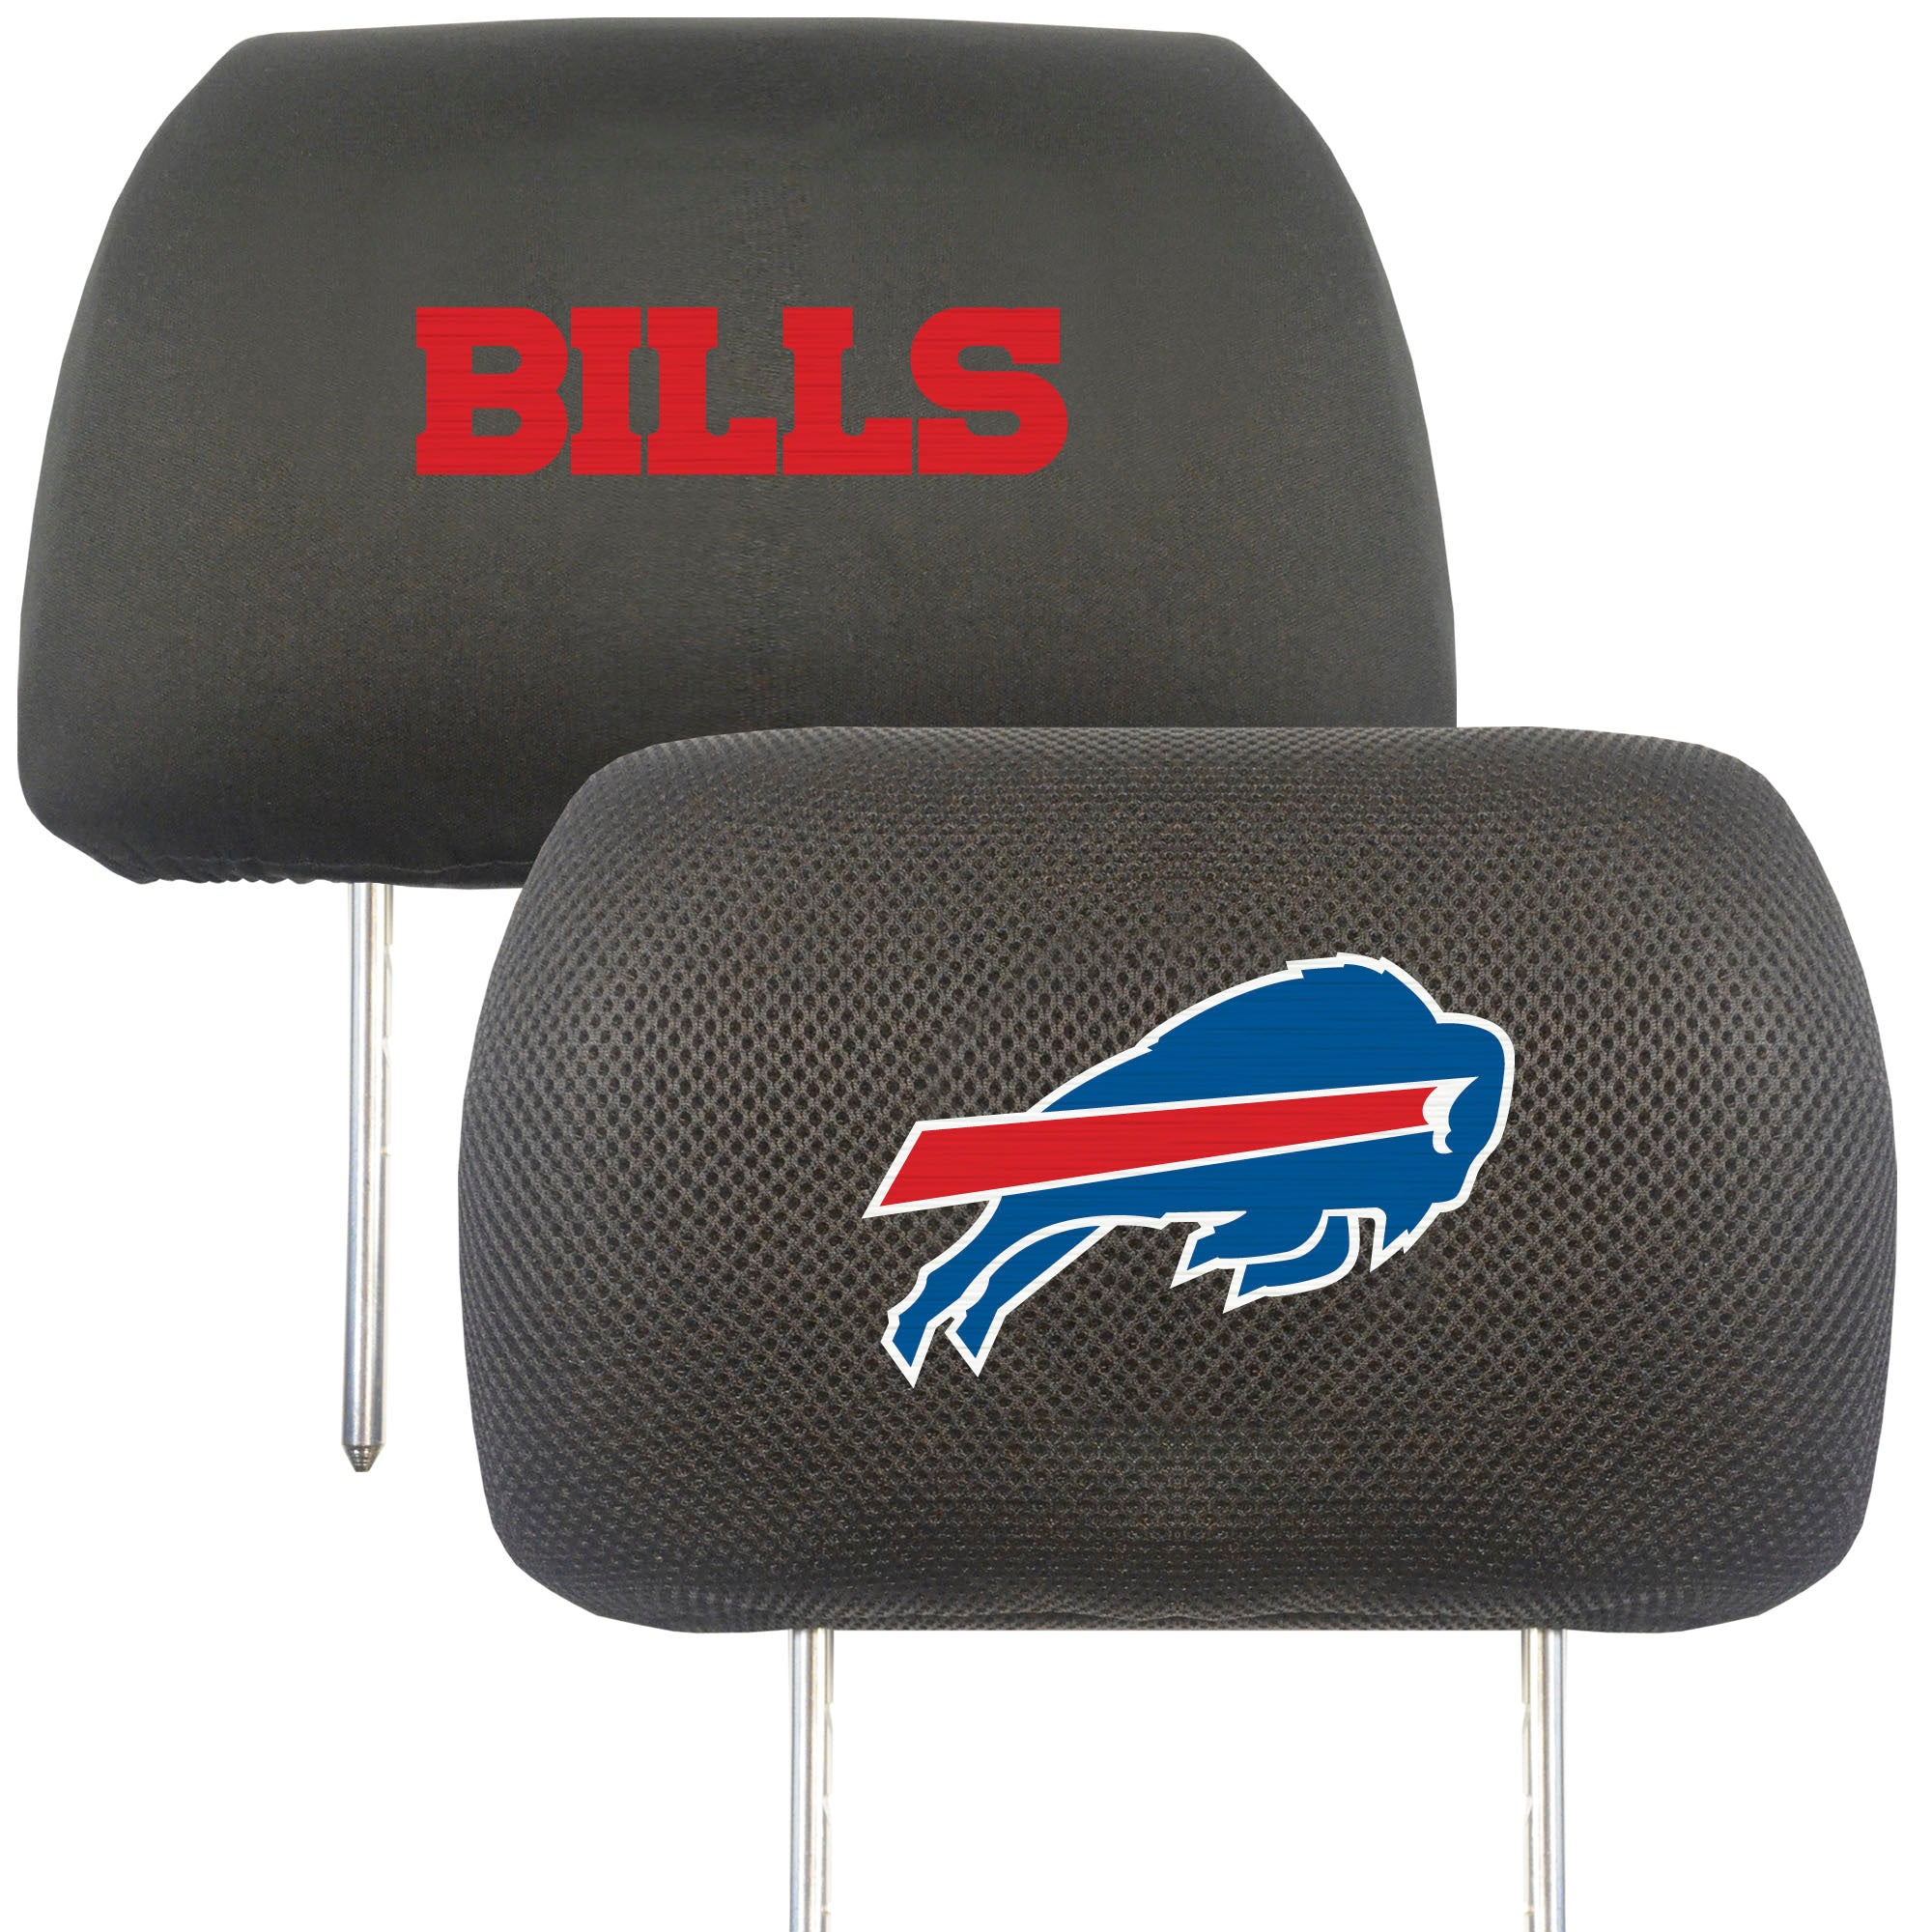 NFL - Buffalo Bills Head Rest Cover